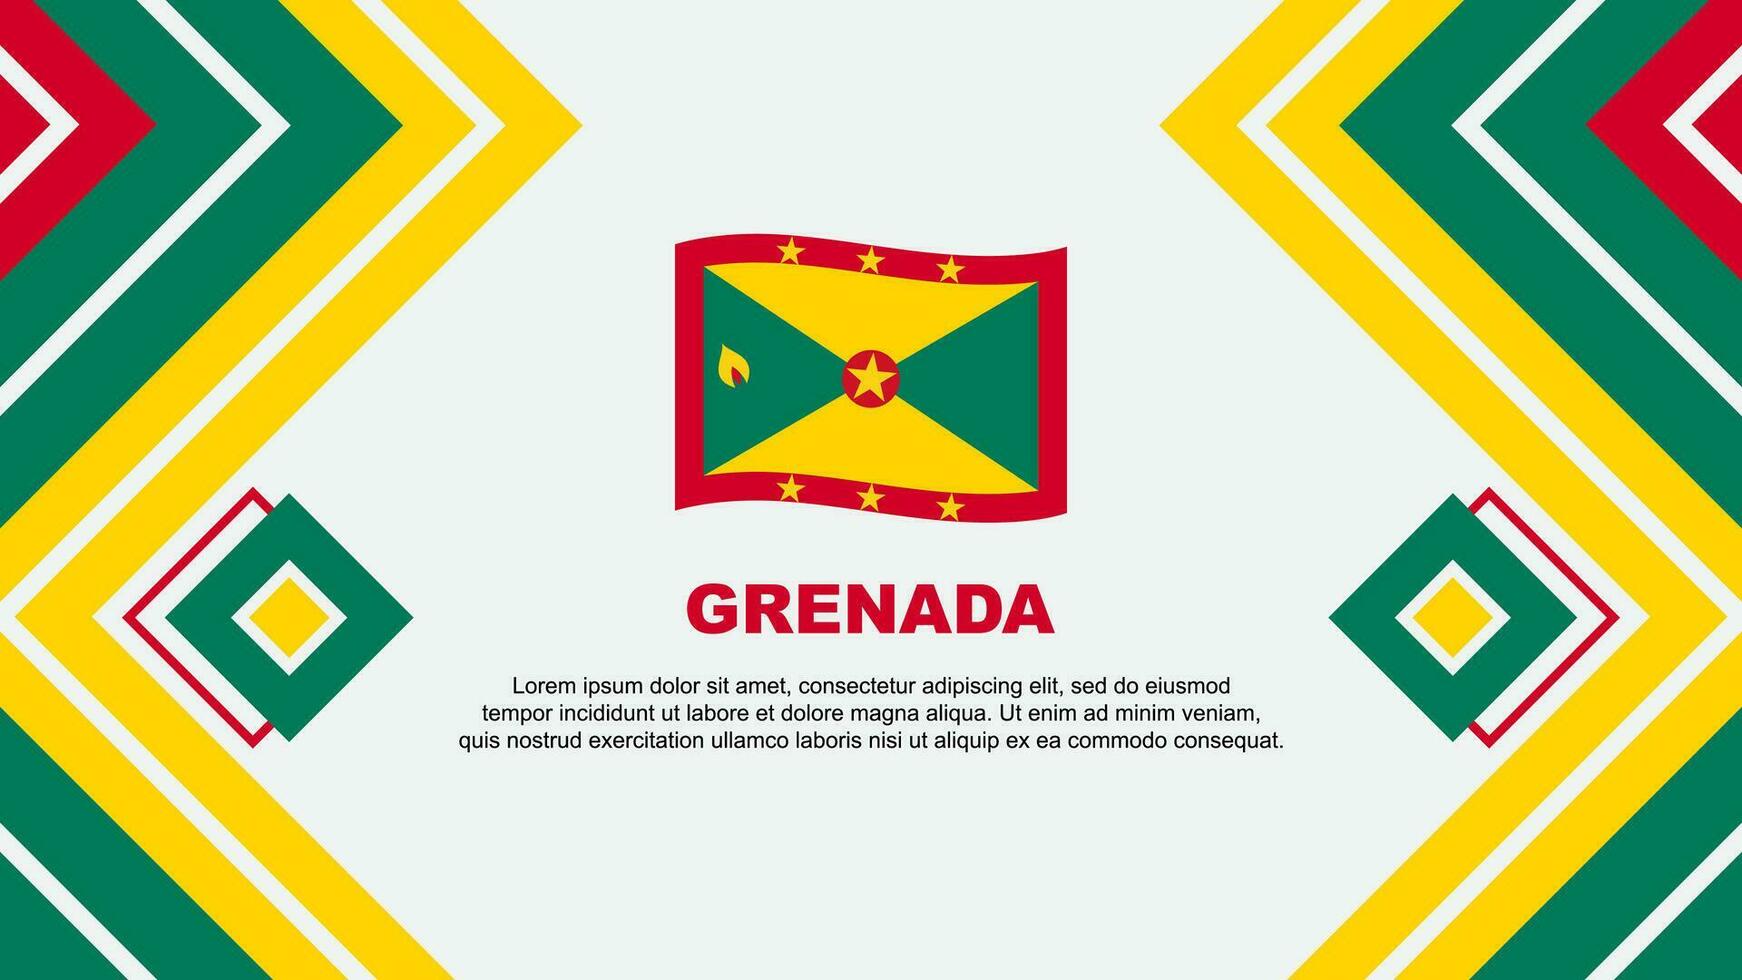 Grenada Flag Abstract Background Design Template. Grenada Independence Day Banner Wallpaper Vector Illustration. Grenada Design